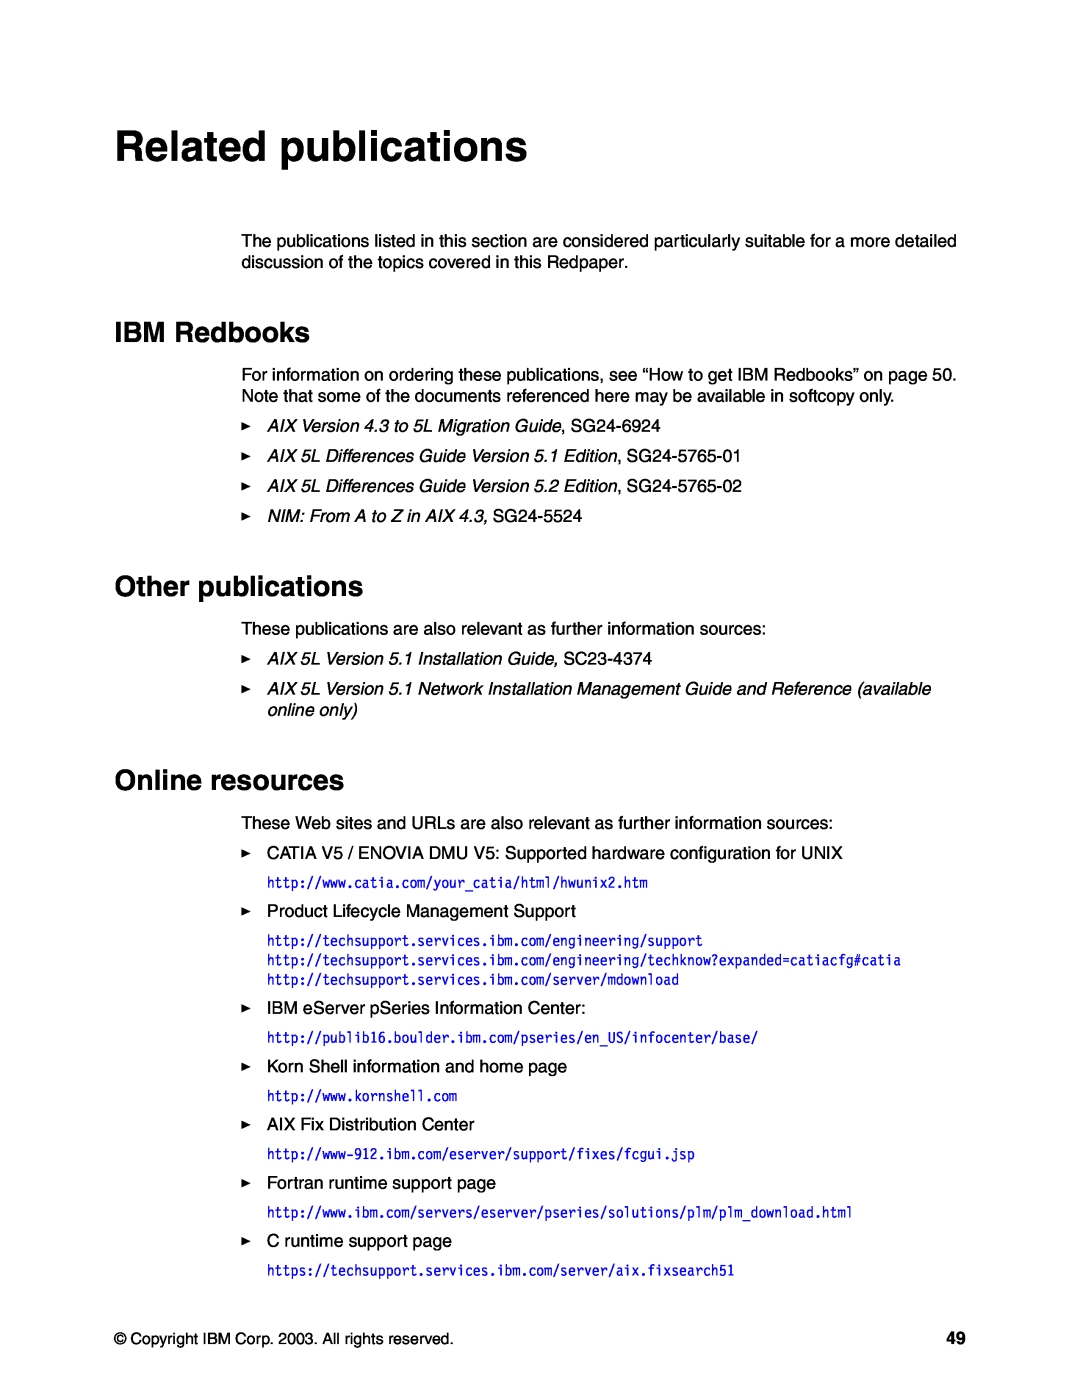 IBM AIX 4.3, AIX5L manual Related publications, IBM Redbooks, Other publications, Online resources 